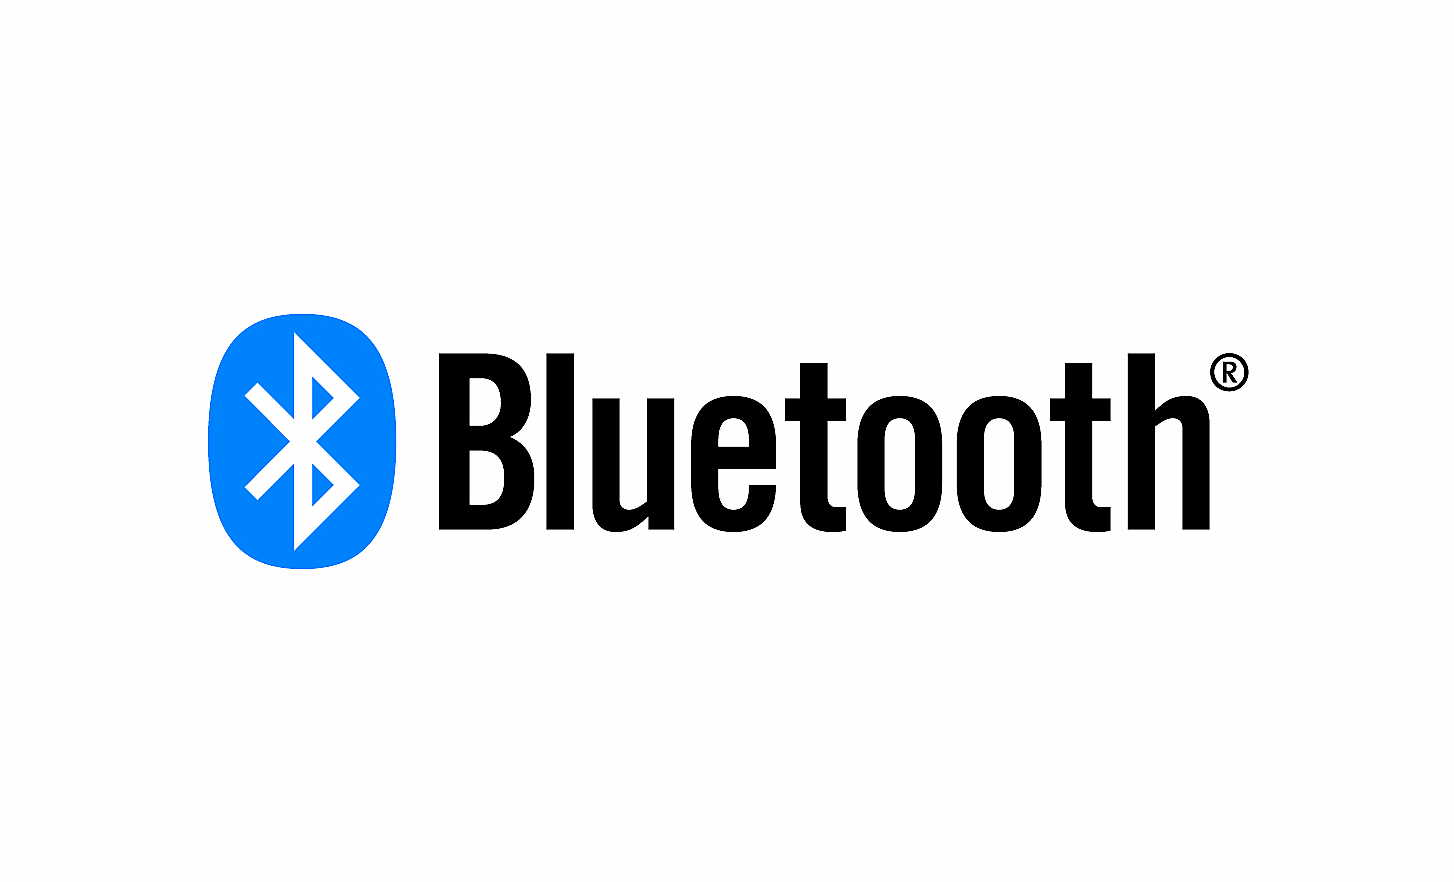 Image of a Bluetooth logo